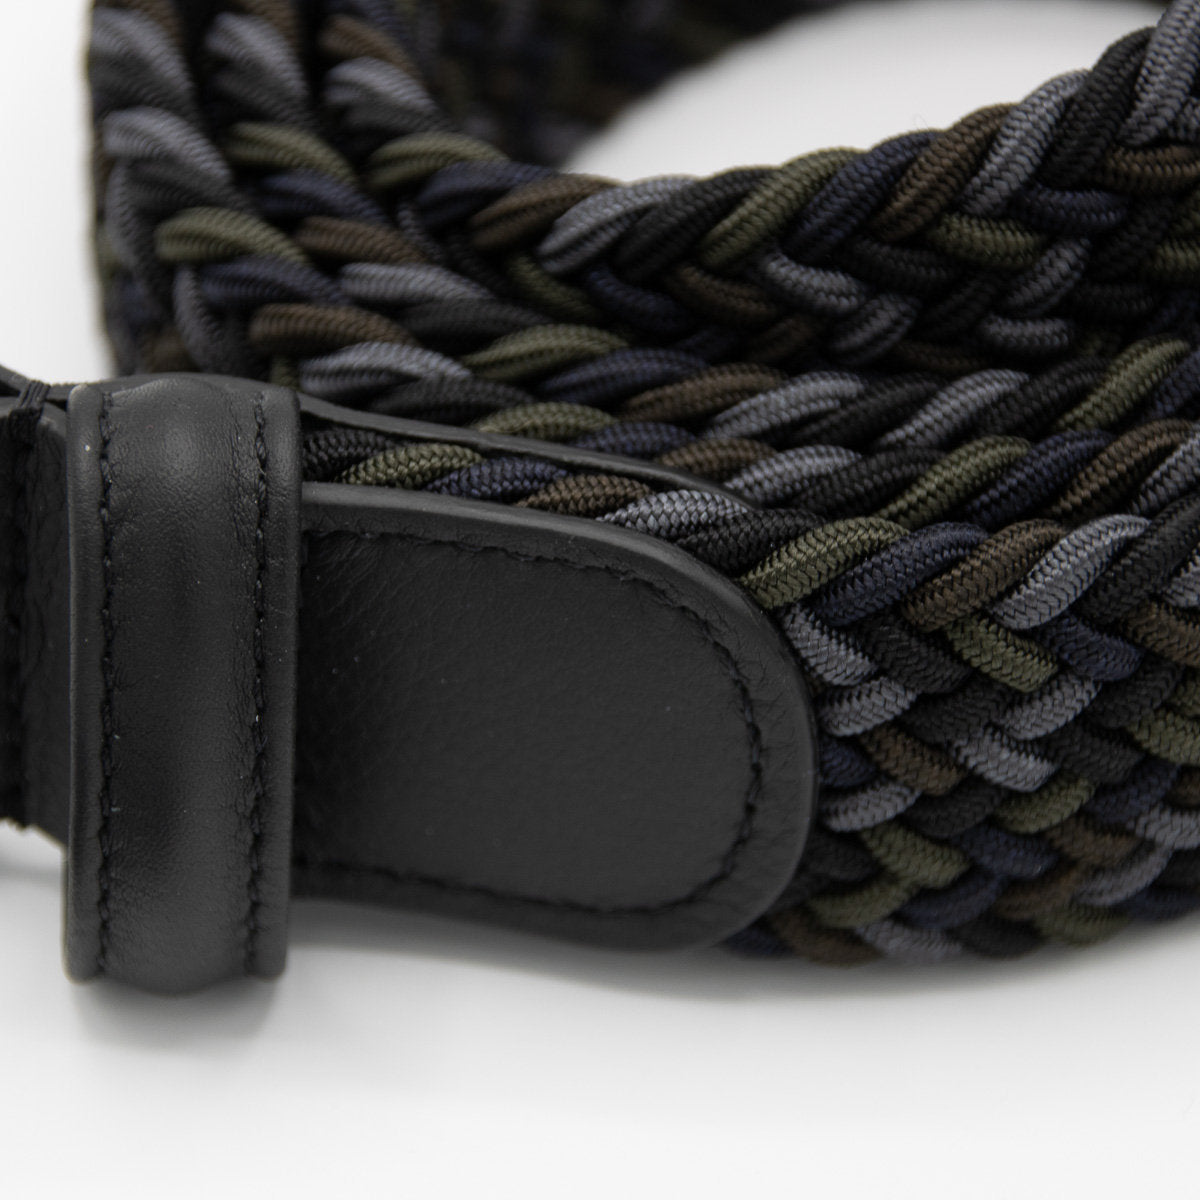 Belt - Grey/Navy/Olive Woven Elasticated